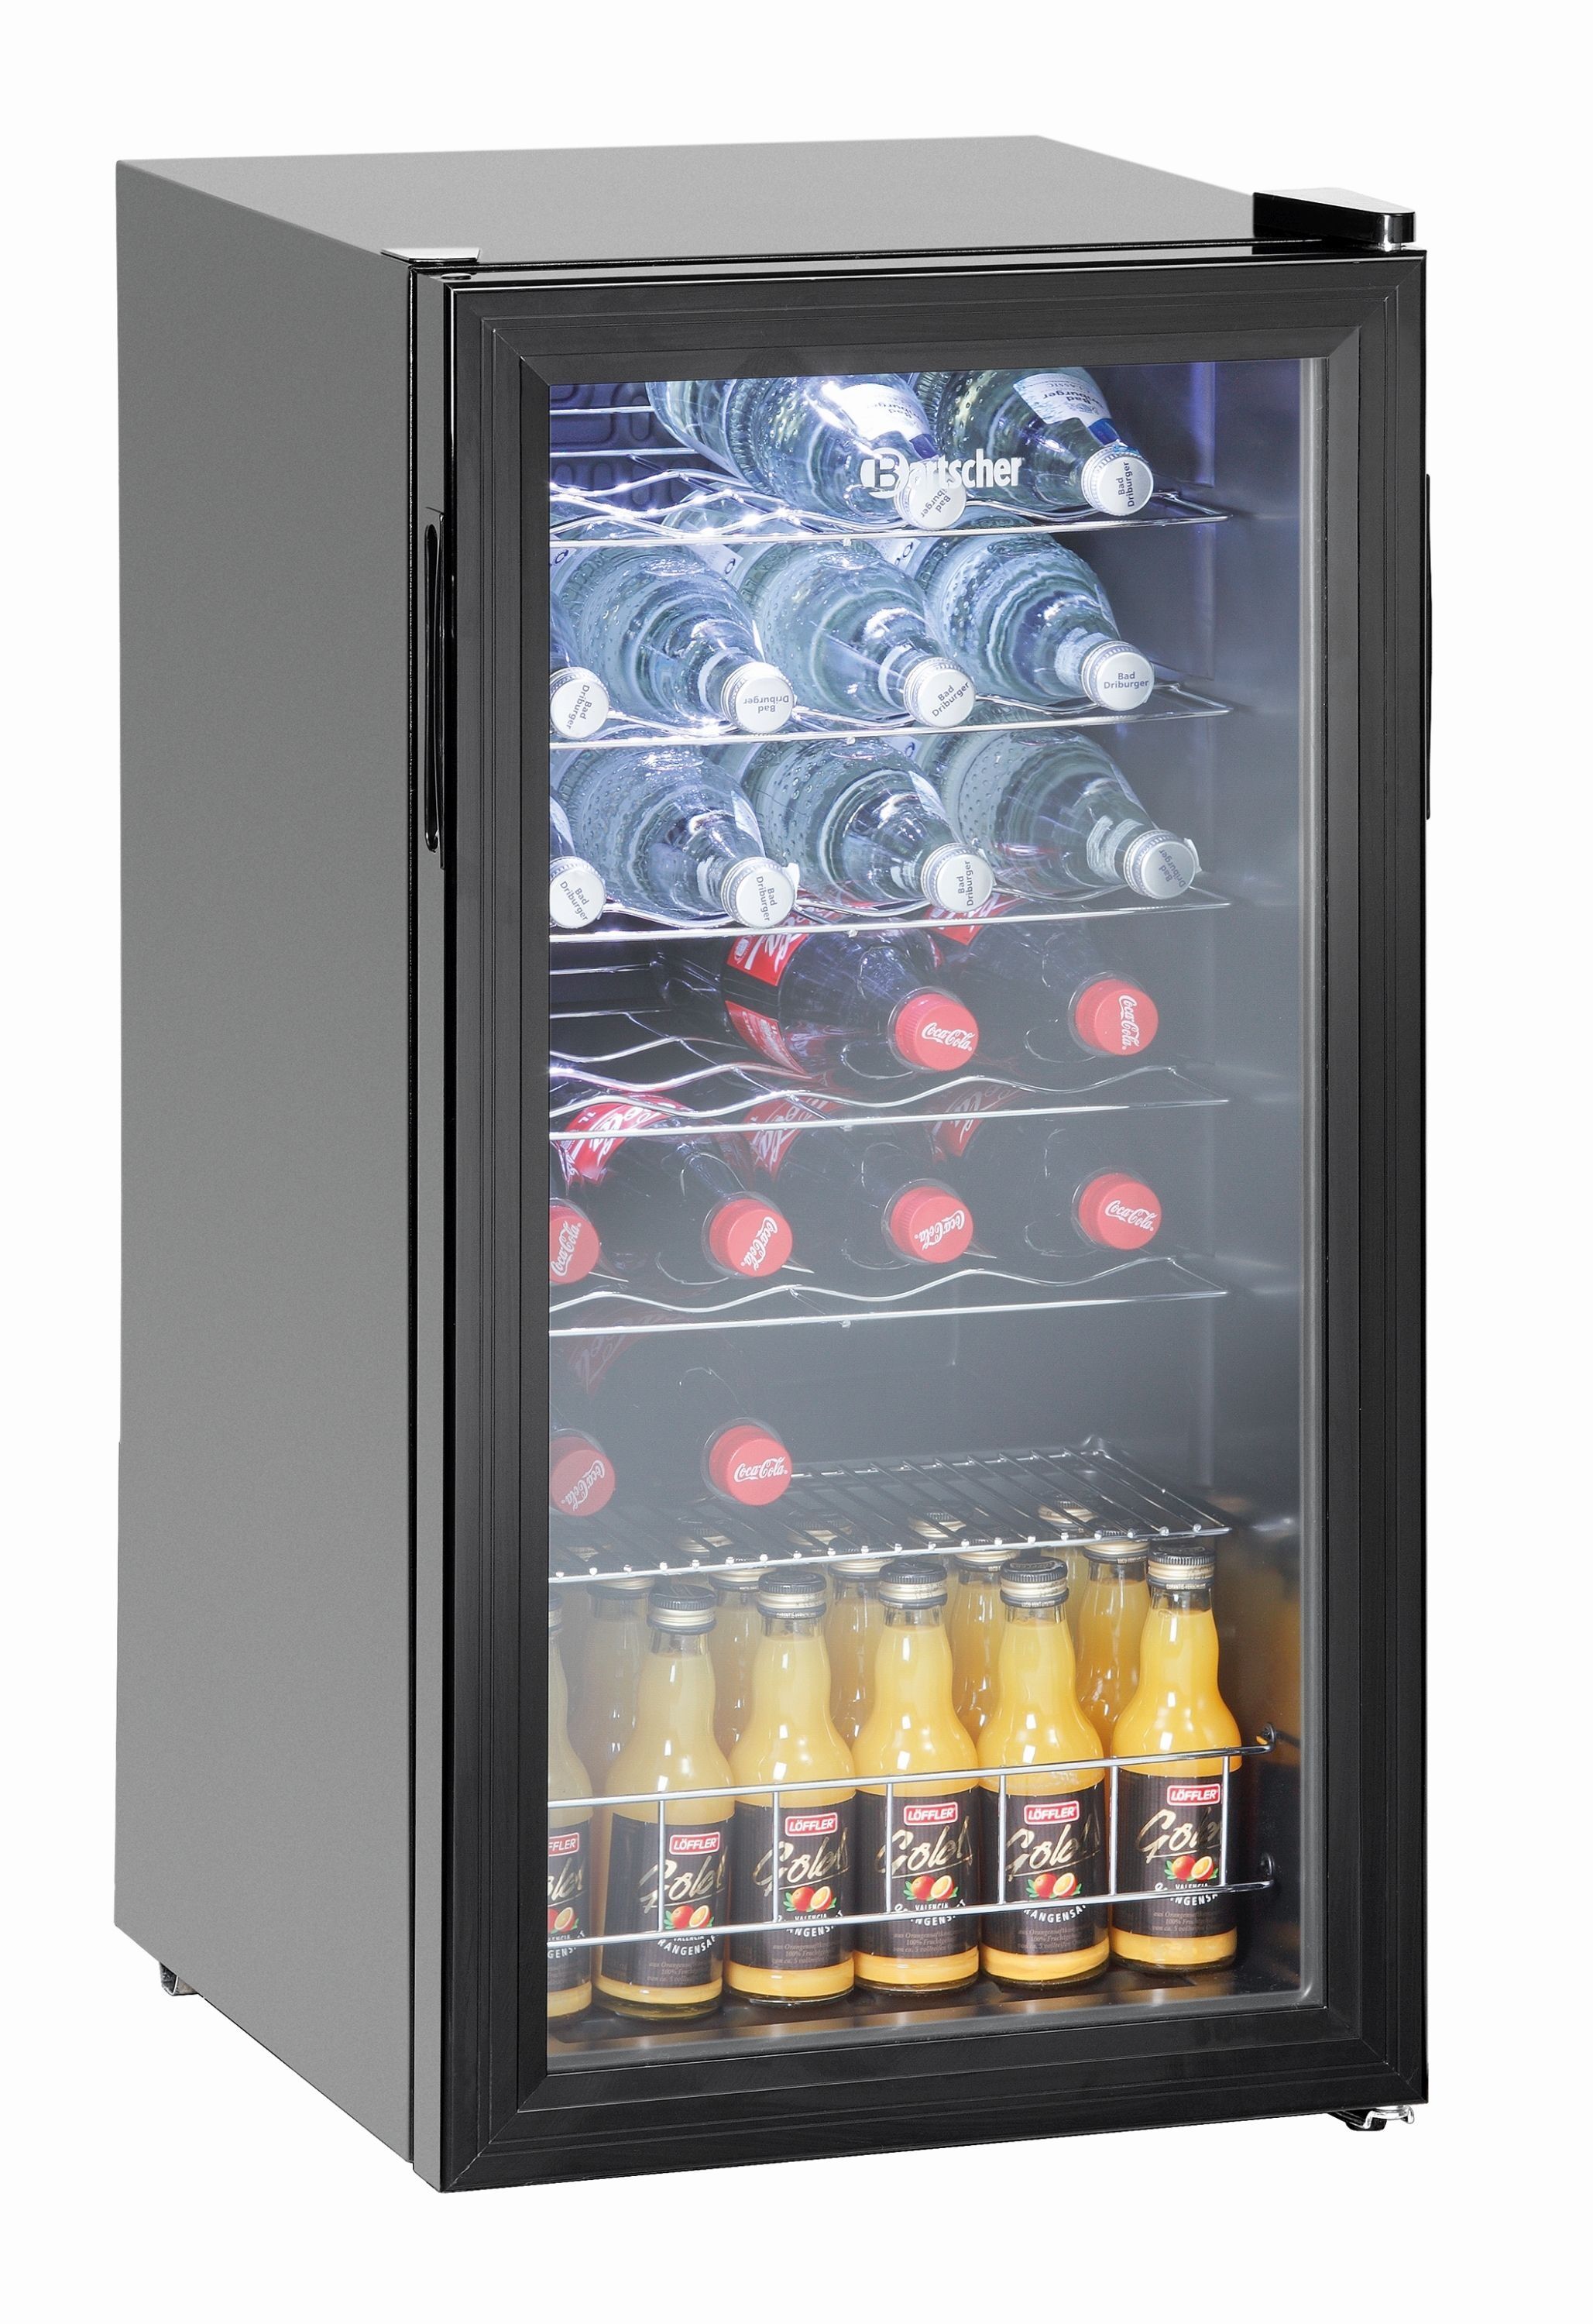 Bartscher Refrigerateur a boissons 88L